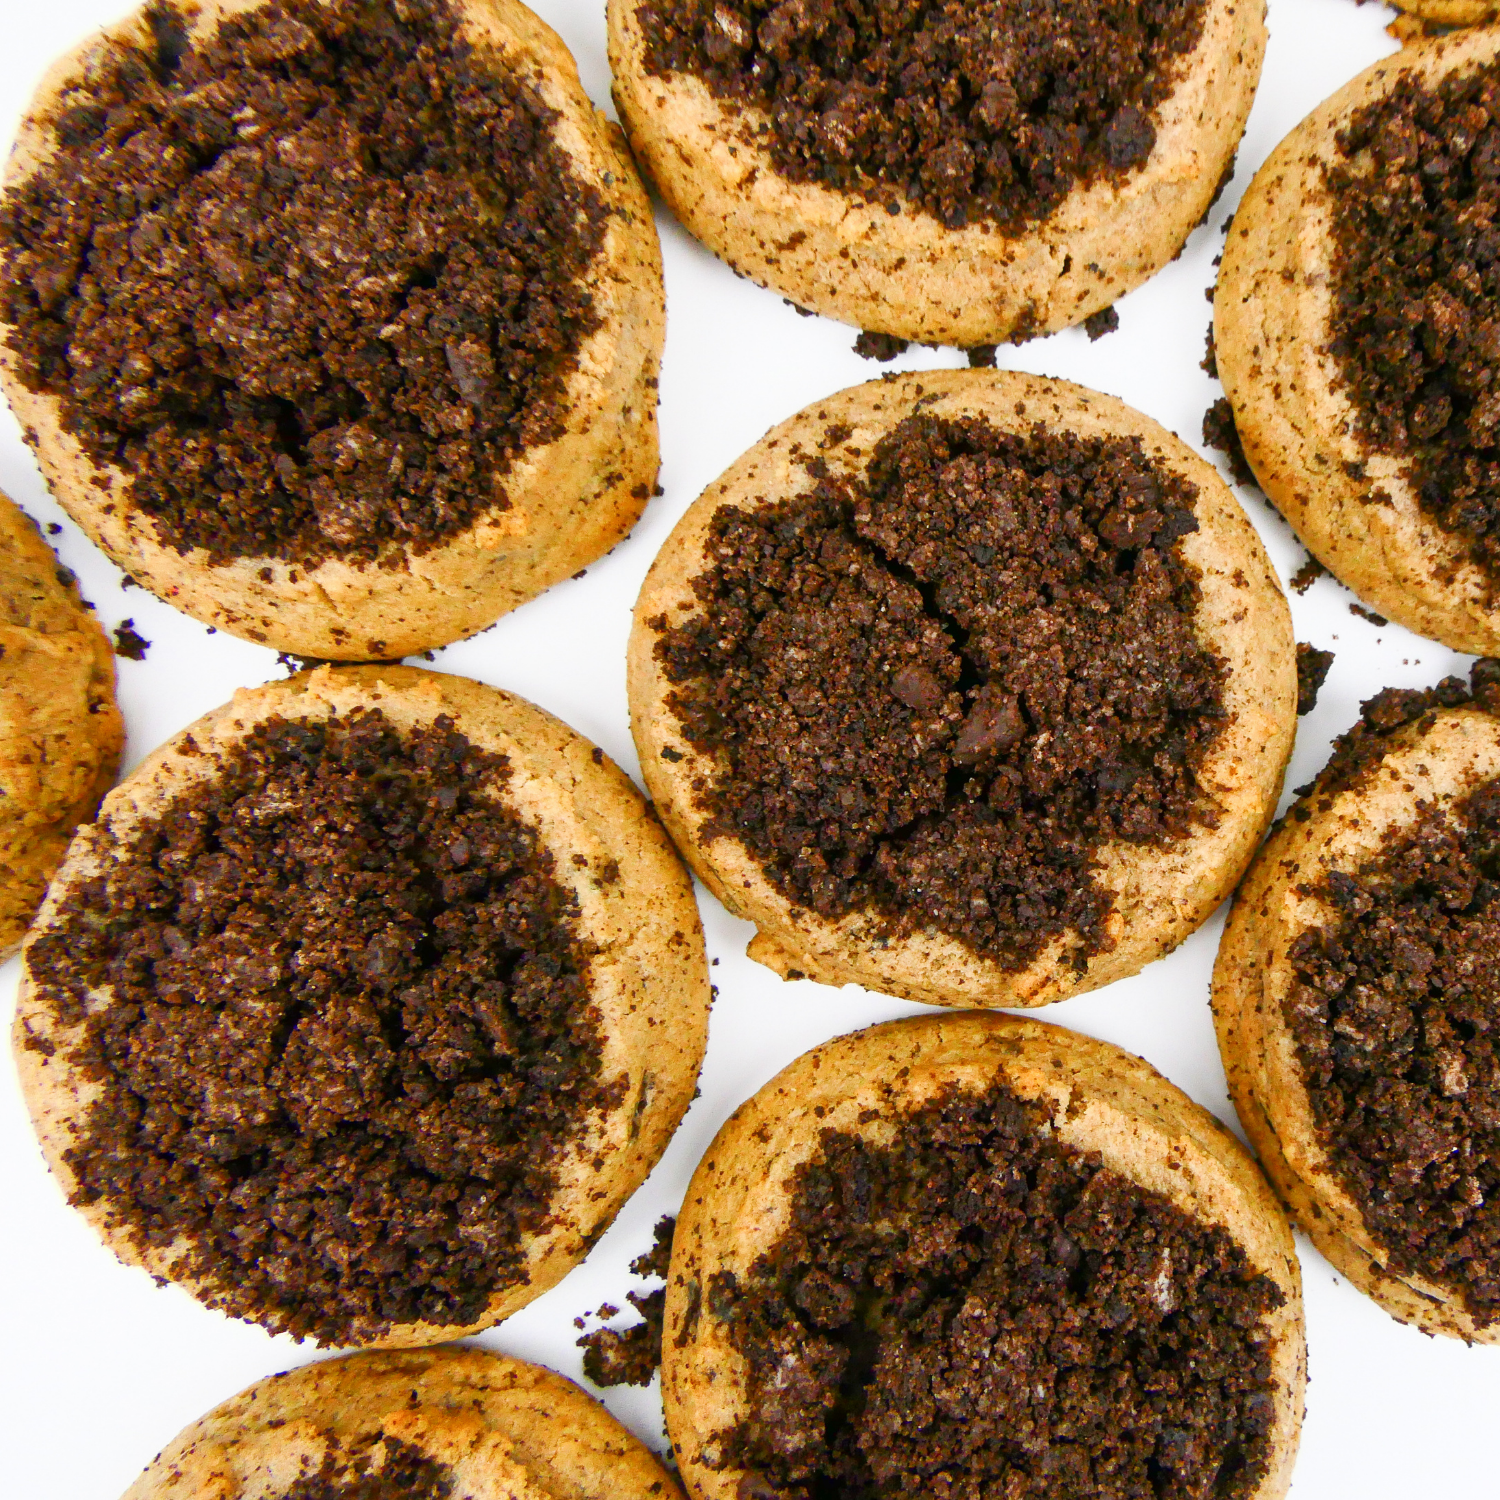 Oreo Churro Cookies - Cookies with Chocolate Crumble